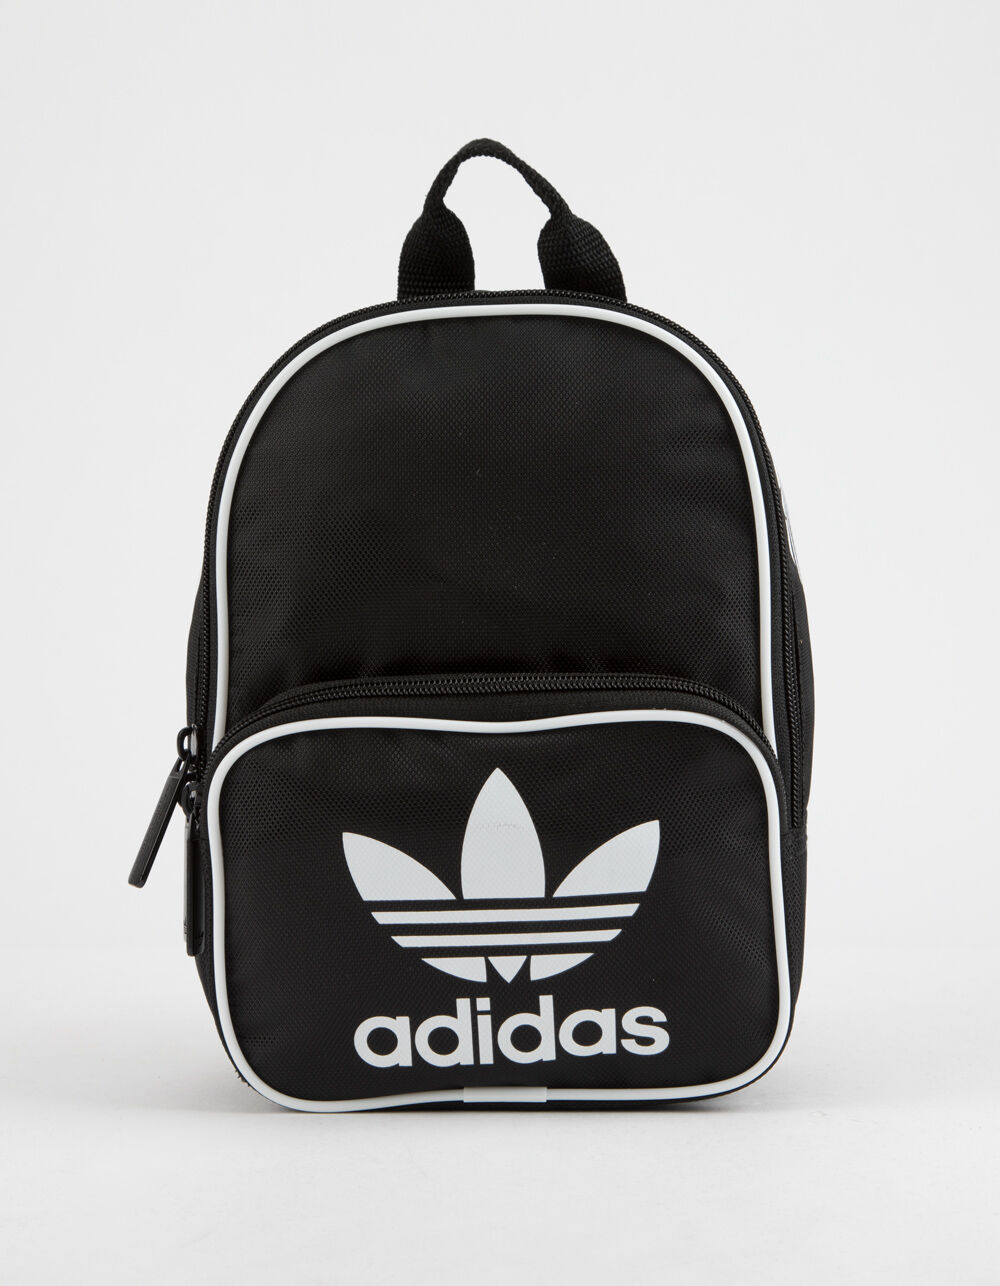 ADIDAS Originals Santiago Black Mini Backpack image number 0